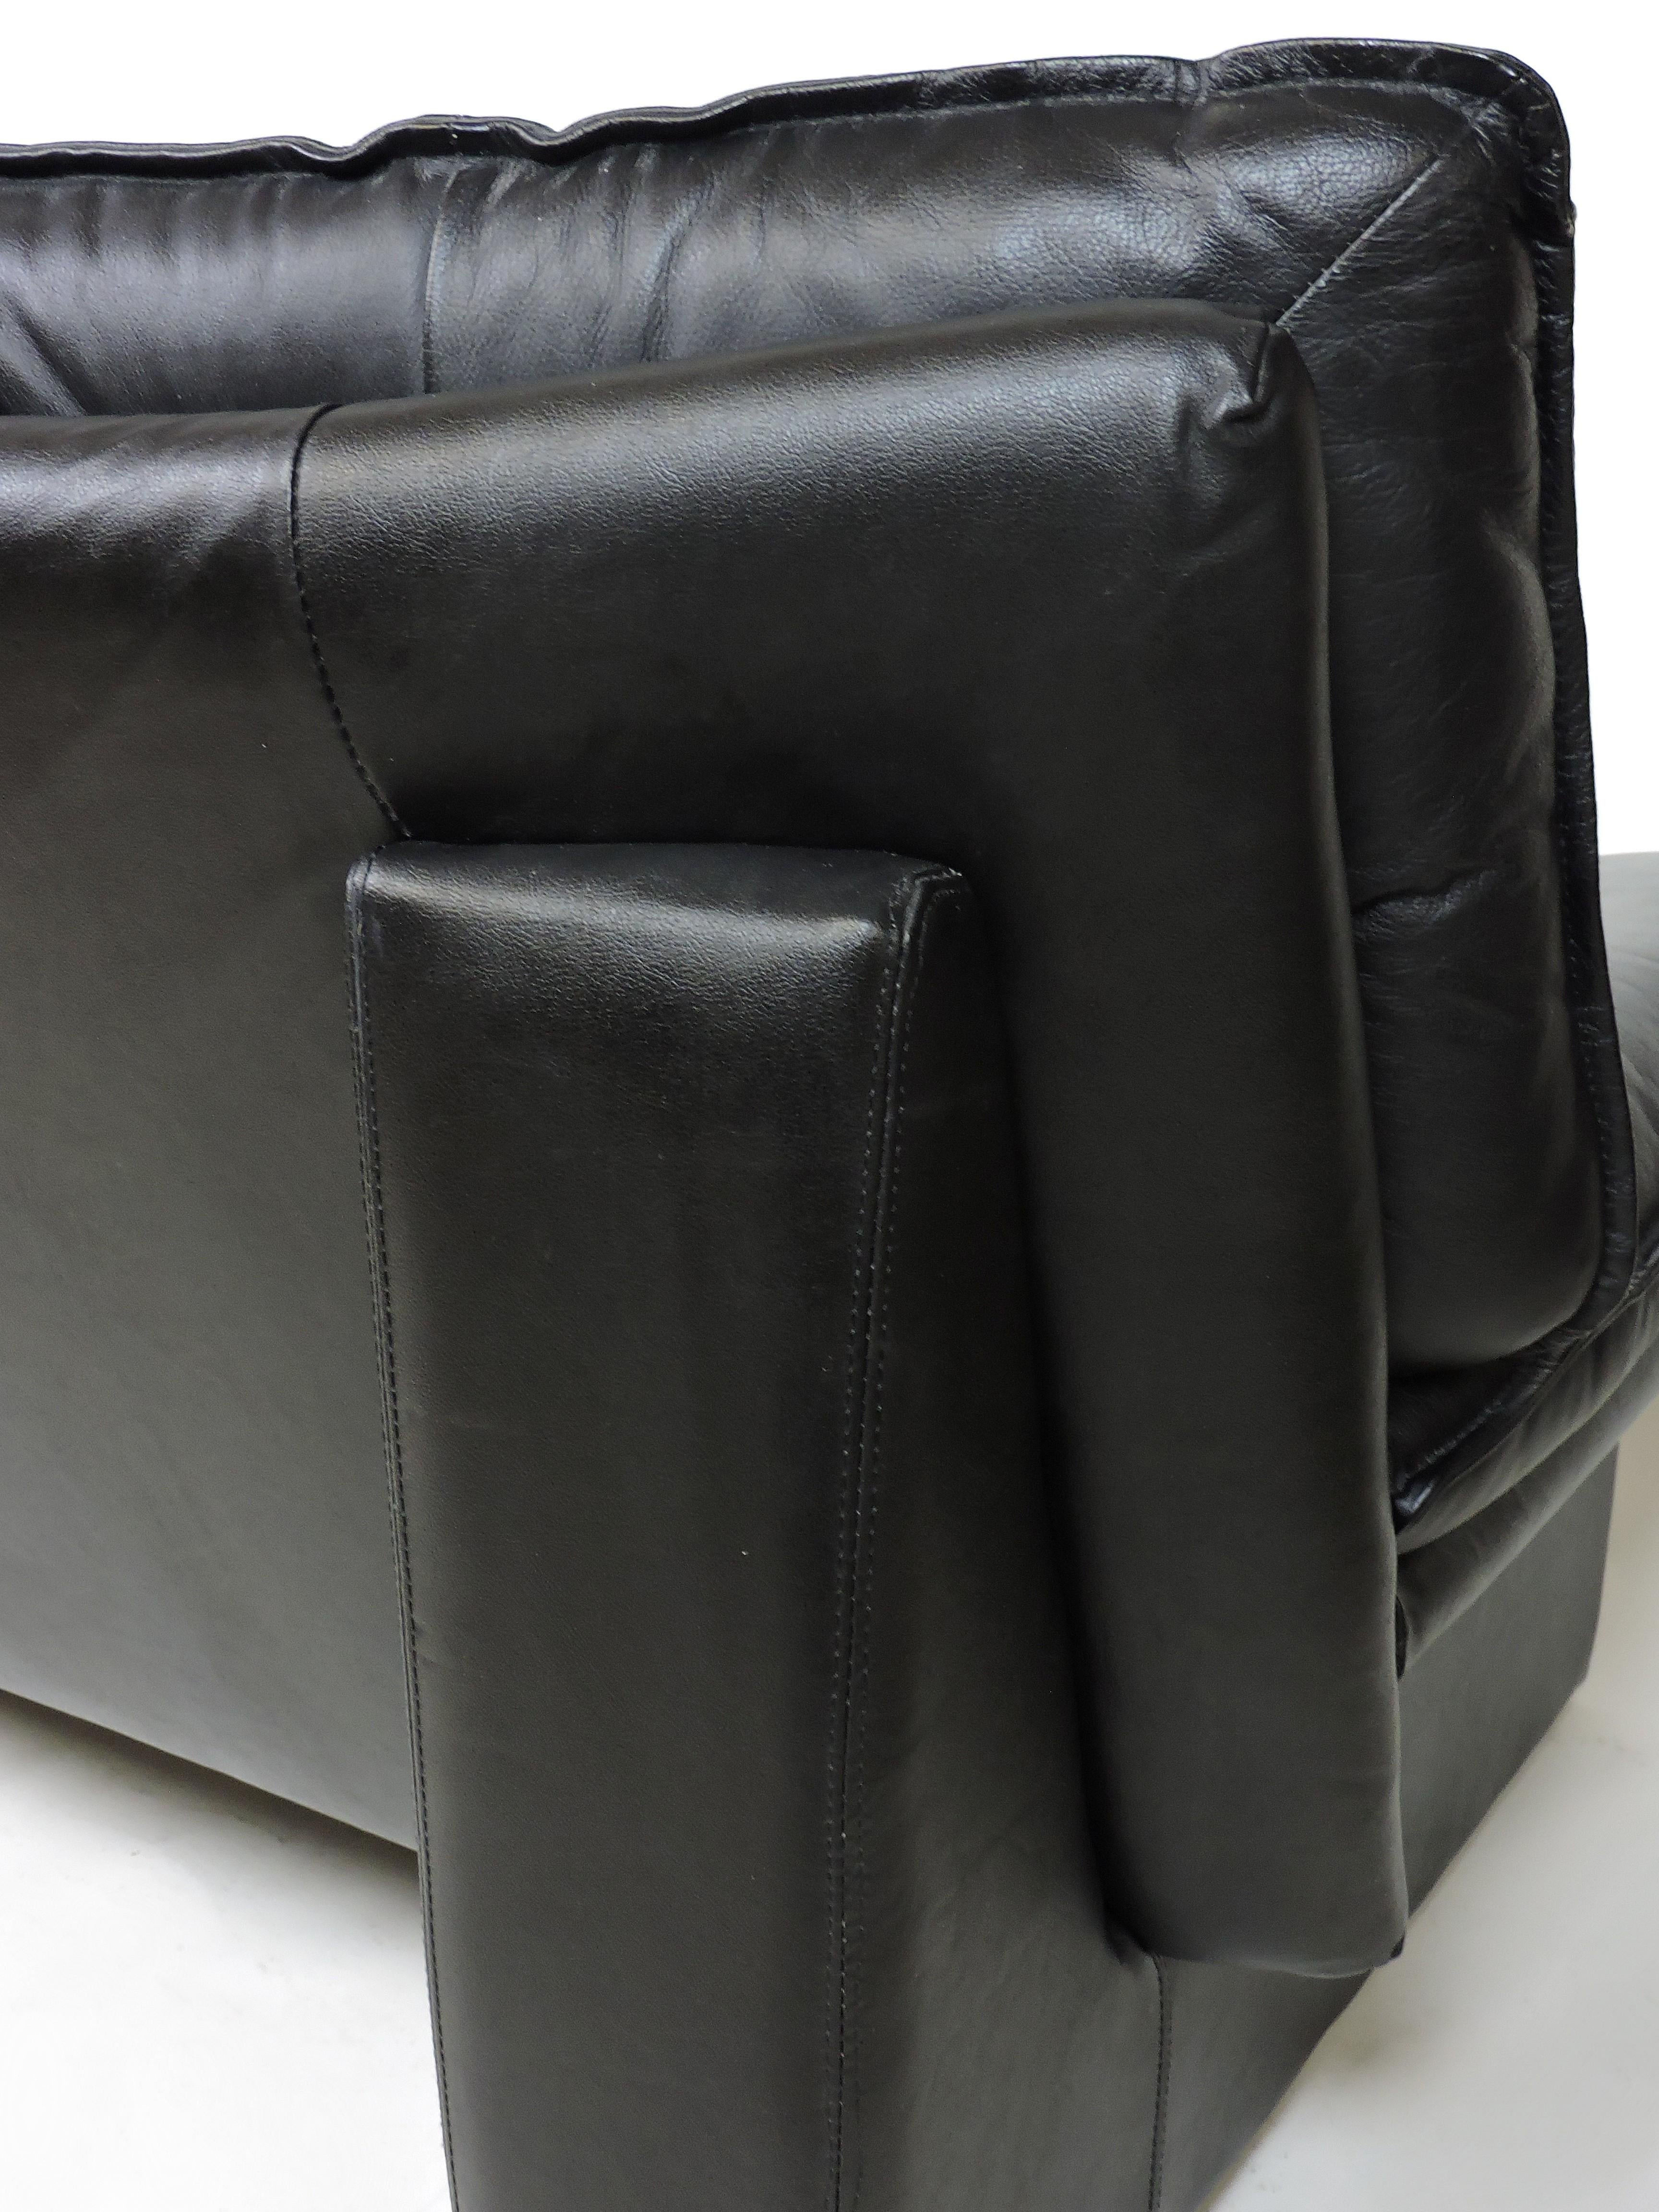 Nicoletti Salotti Italian Post Modern Black Leather Sofa 2